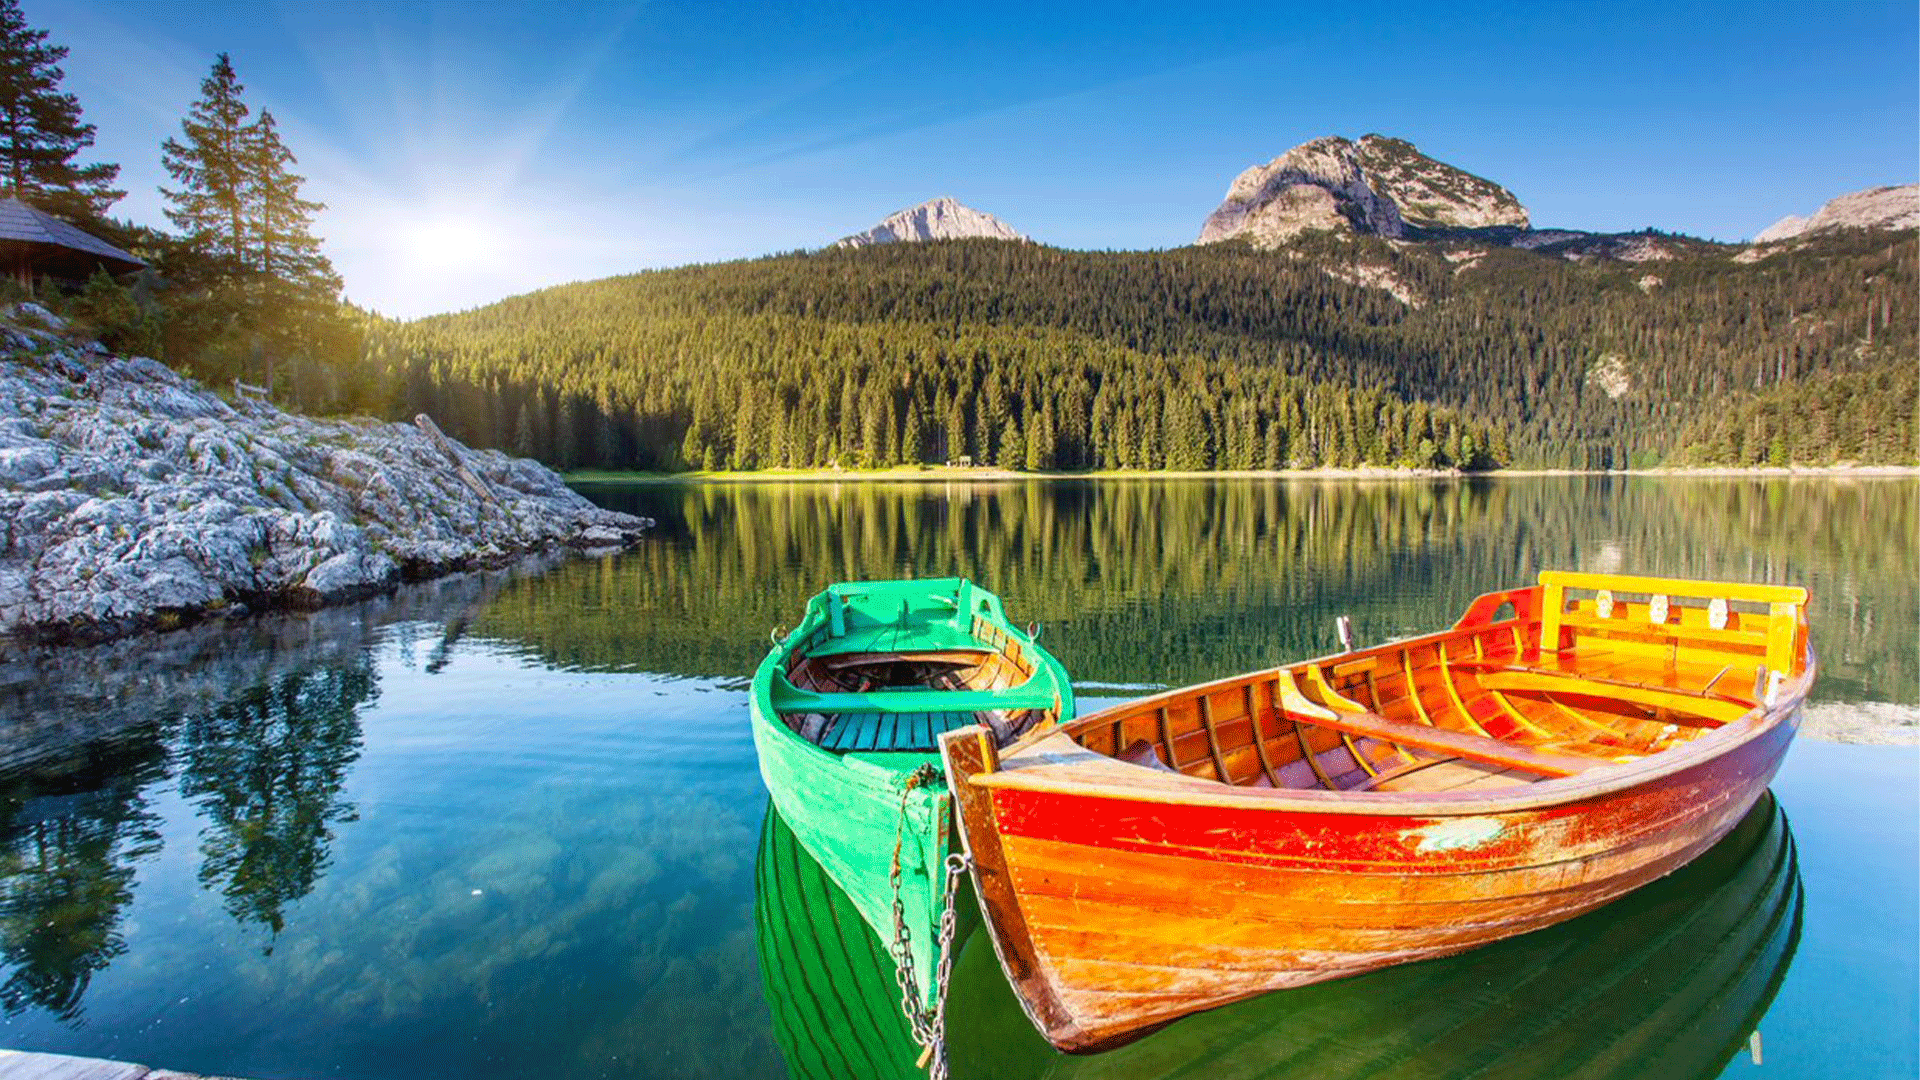 montenegro-durmitor-national-park-lake-boats-mountains